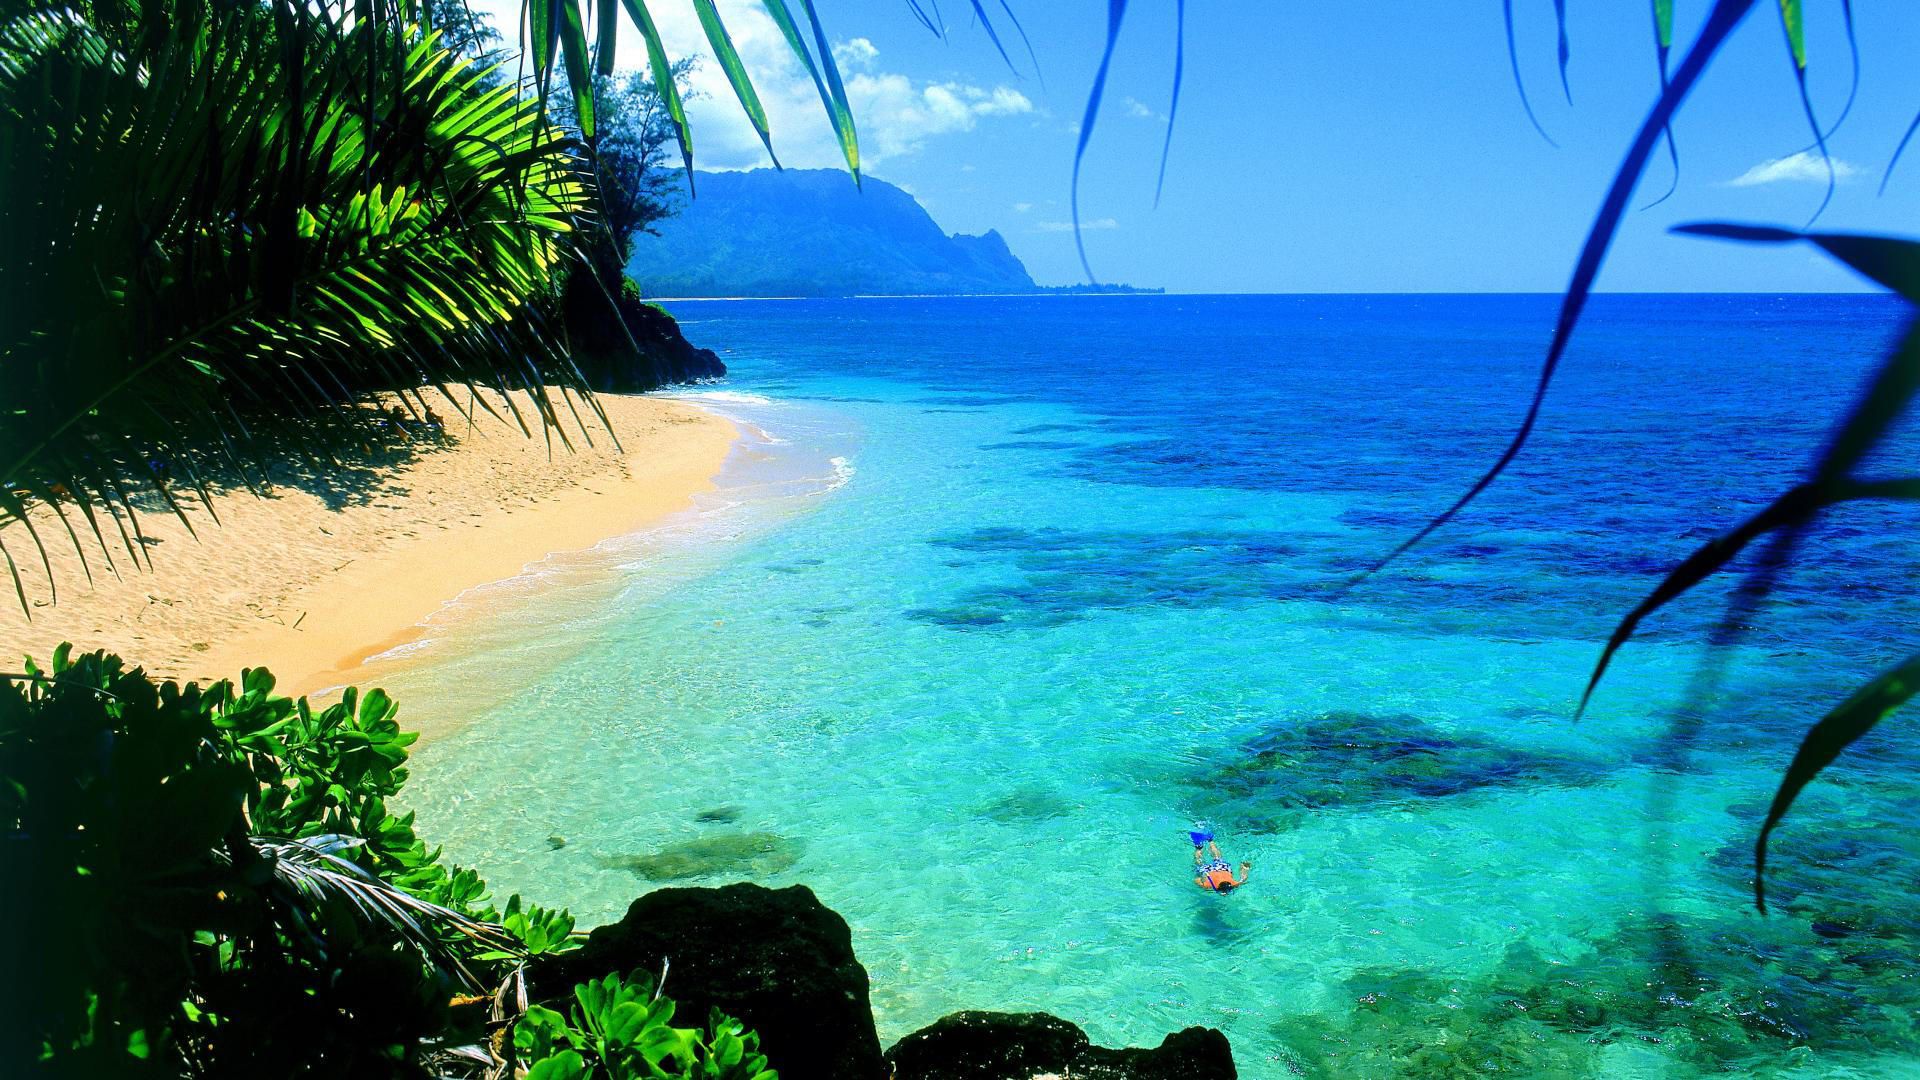 Hawaiian Desktop Wallpaper - HD Wallpapers Backgrounds of Your Choice